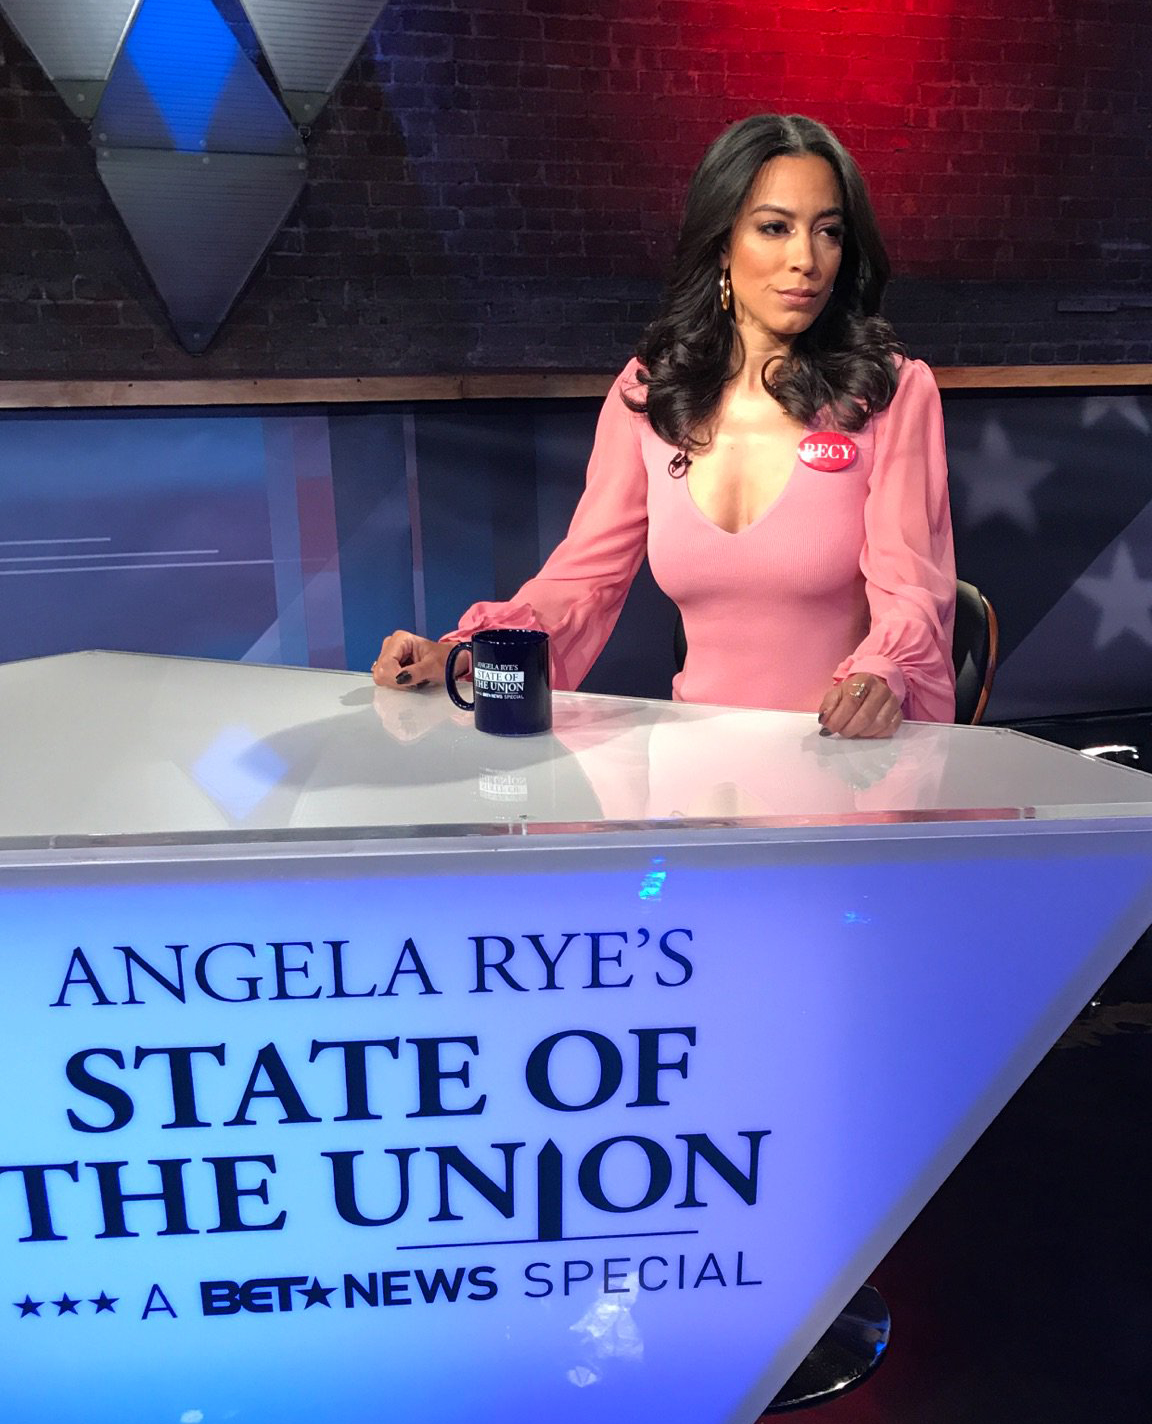 angelay-rye-state-of-the-union-bet-news-theblackmedia.